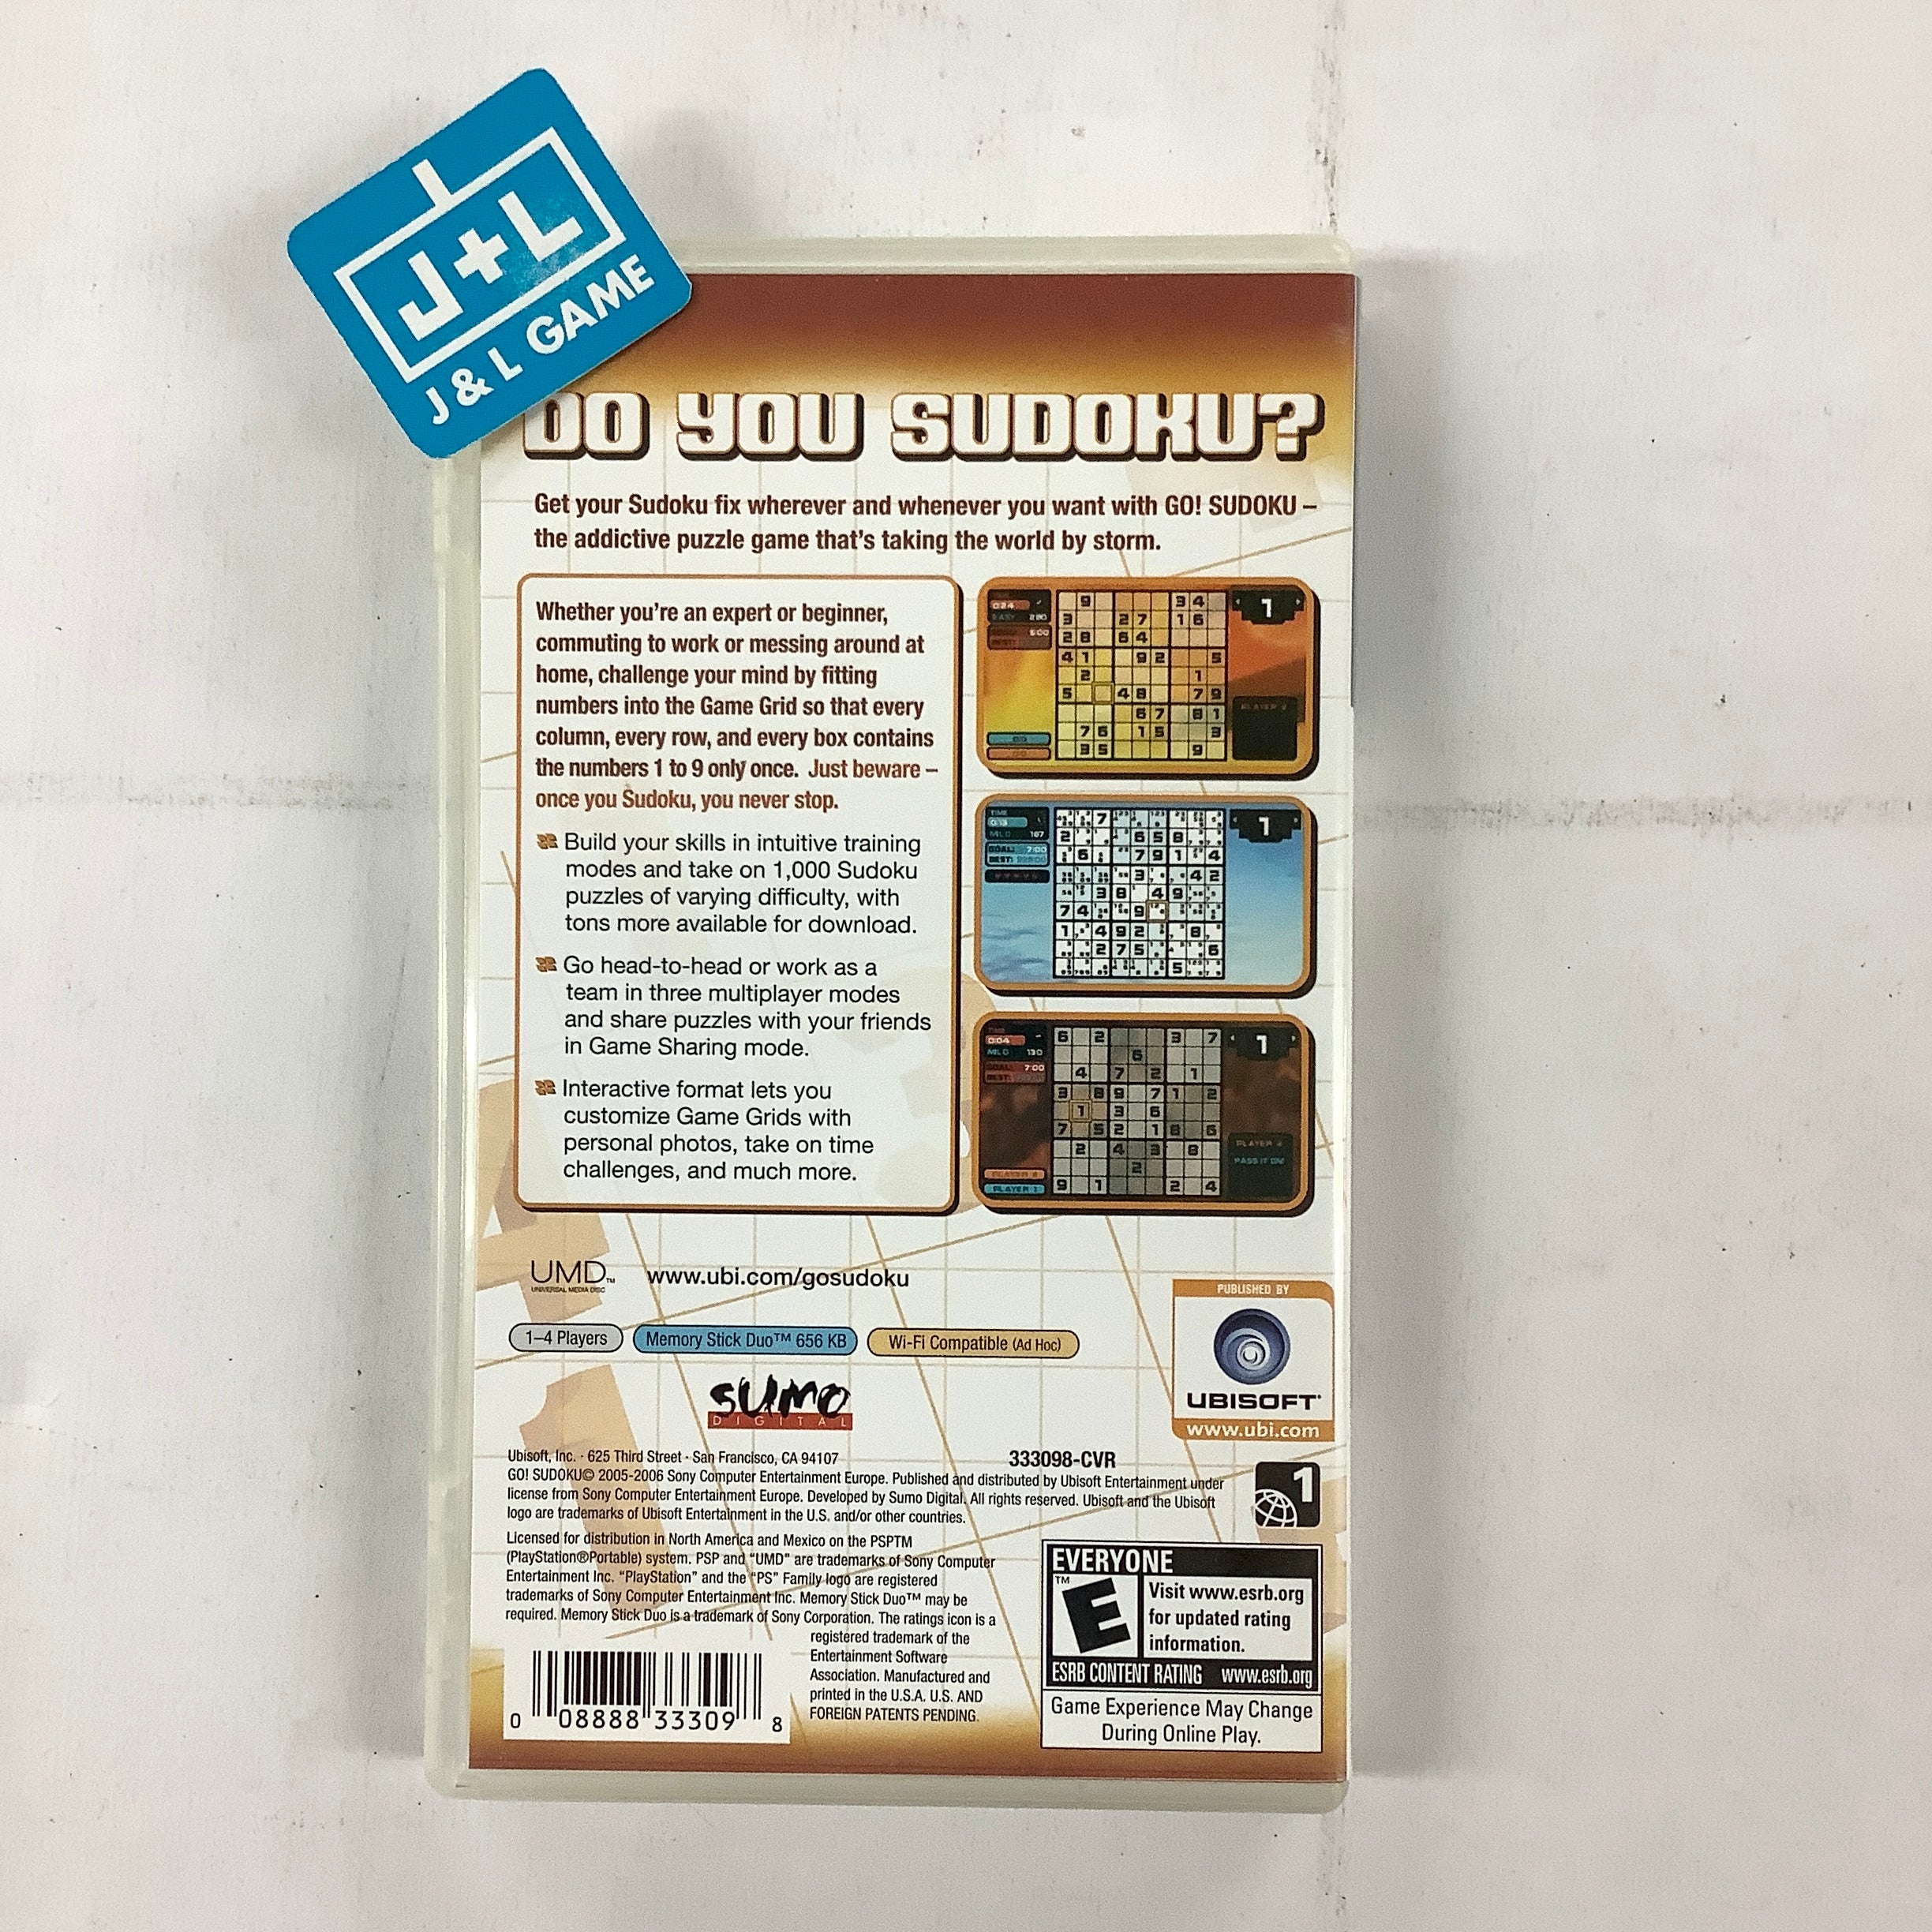 Go! Sudoku - Sony PSP [Pre-Owned] Video Games Ubisoft   